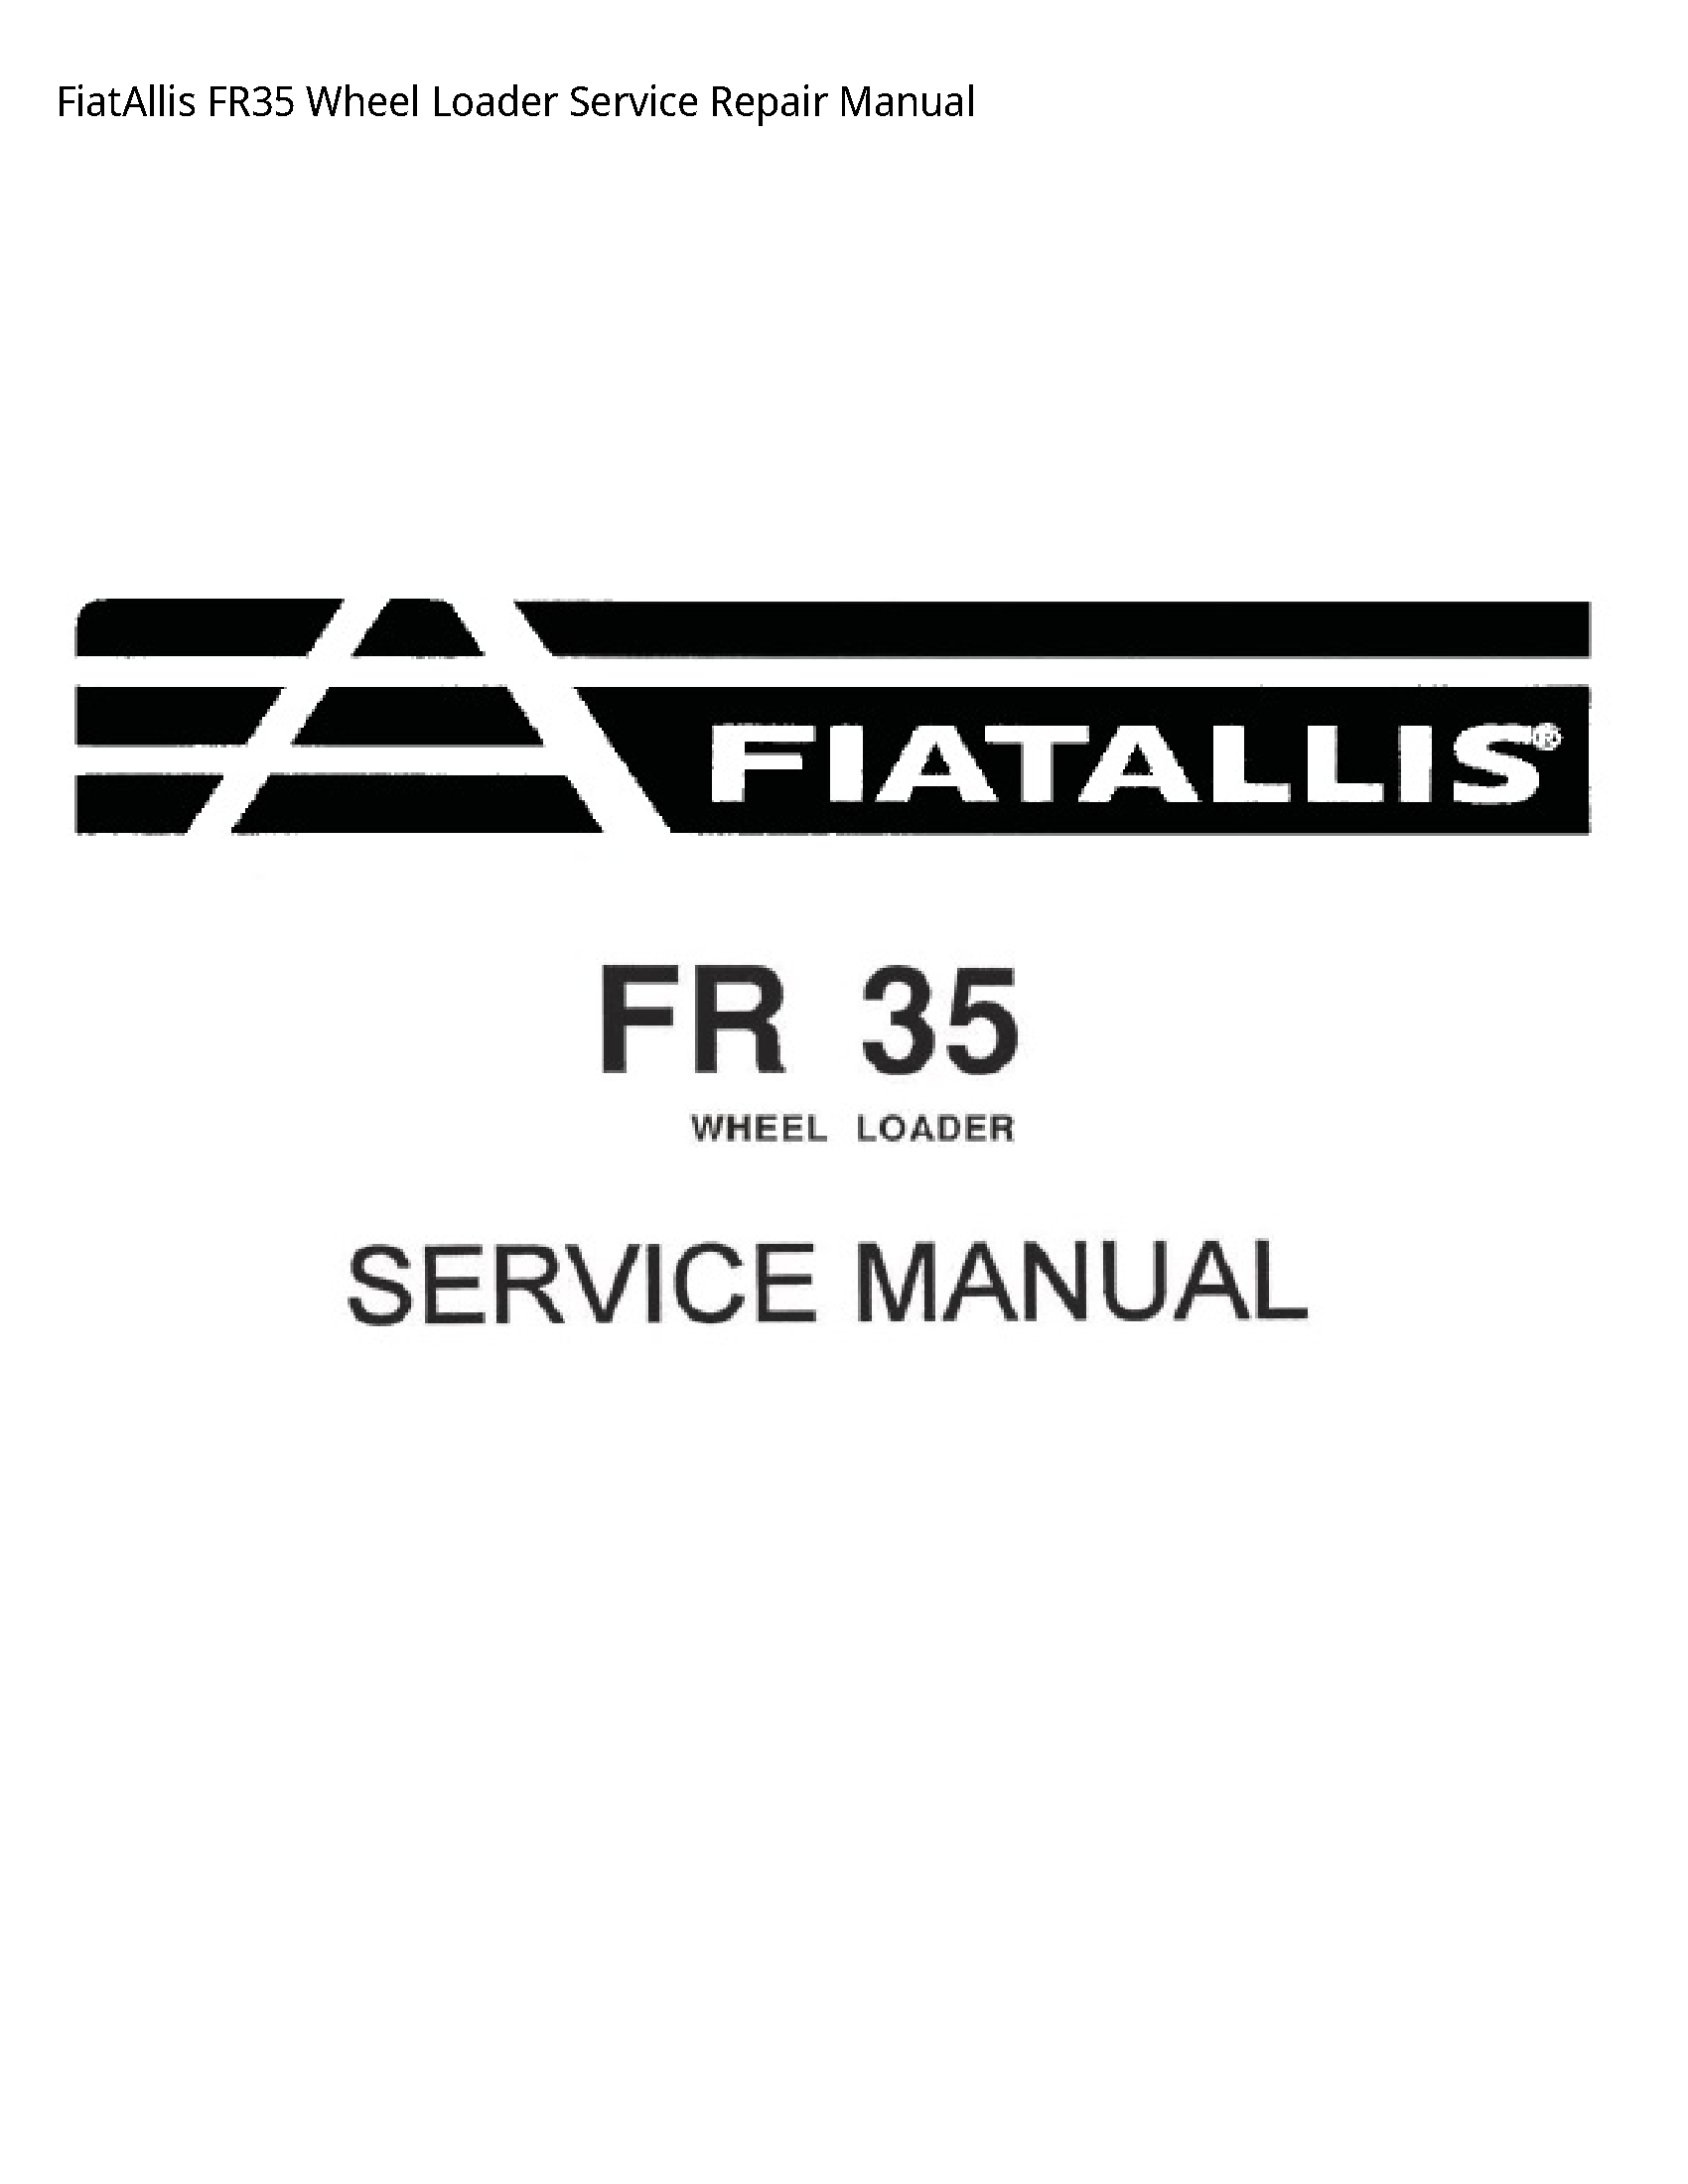 Fiatallis FR35 Wheel Loader manual